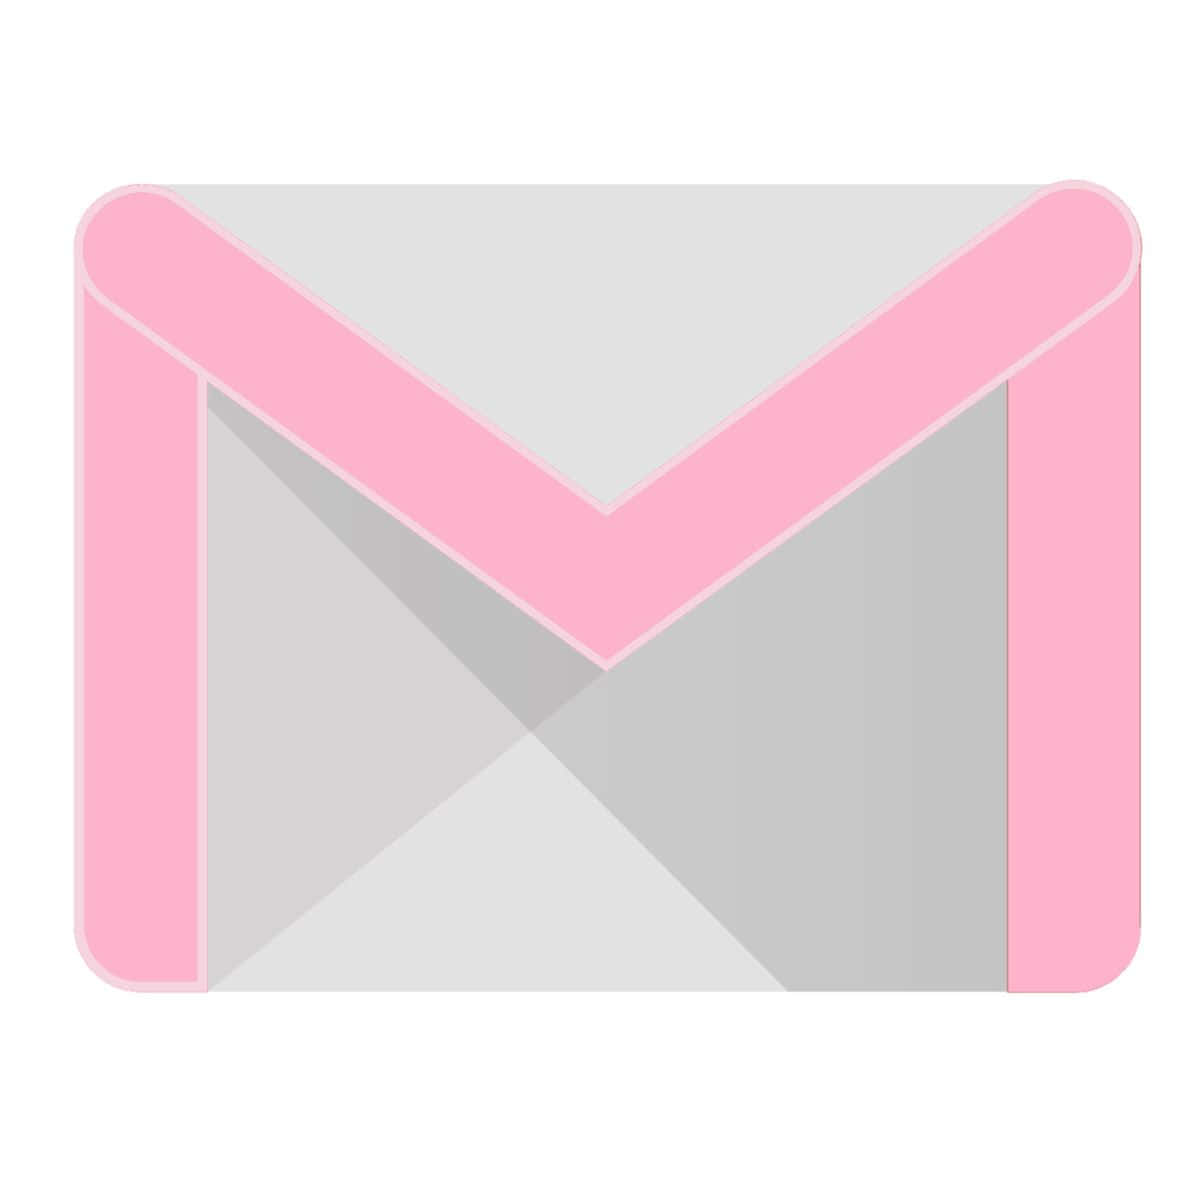 Gmailden Mest Populære E-mail Platform